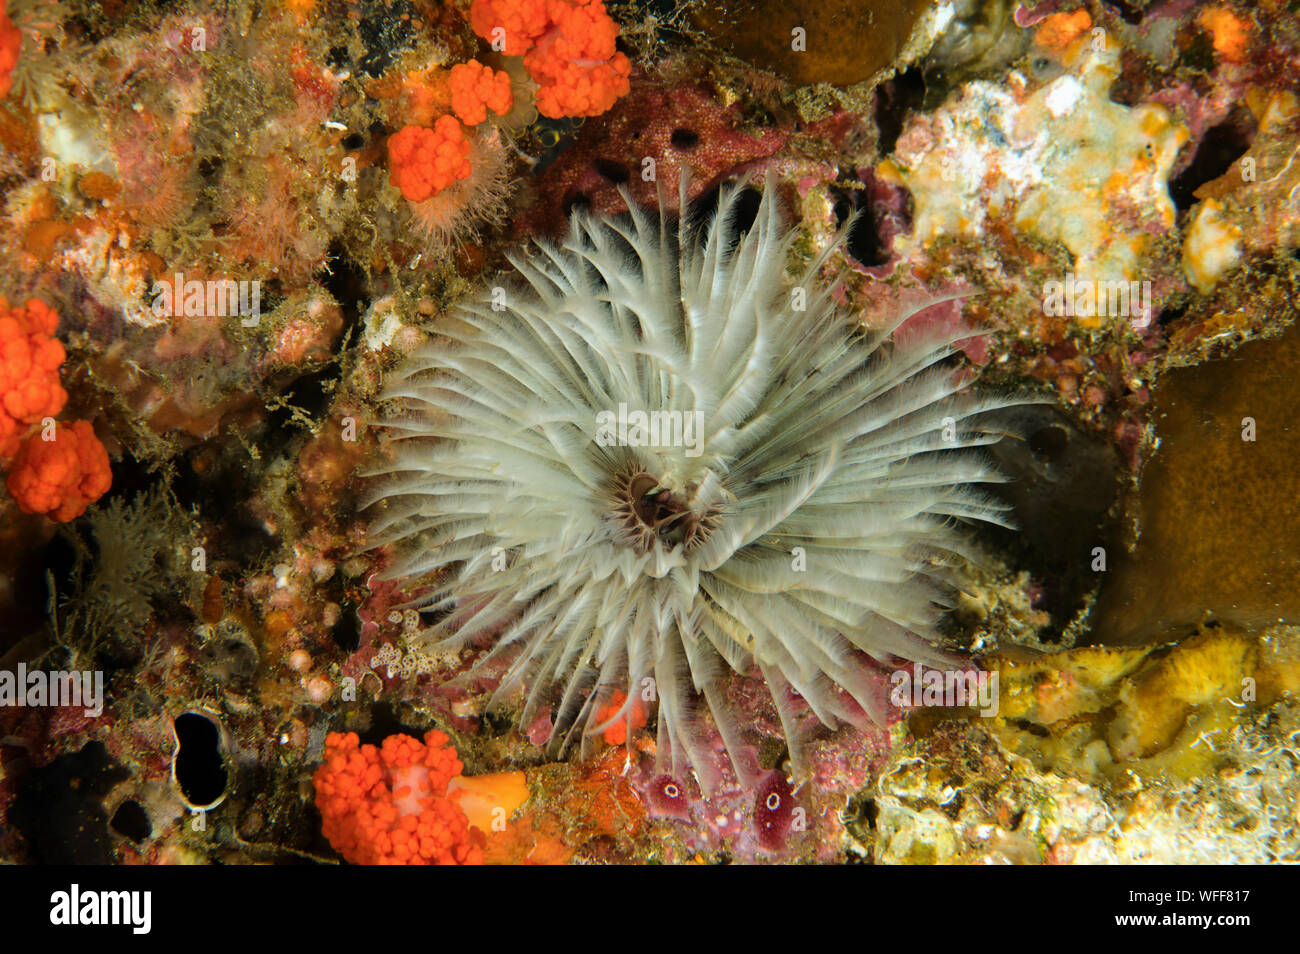 Marine worm, Sabellidae, Raja Ampat Indonesia Stock Photo